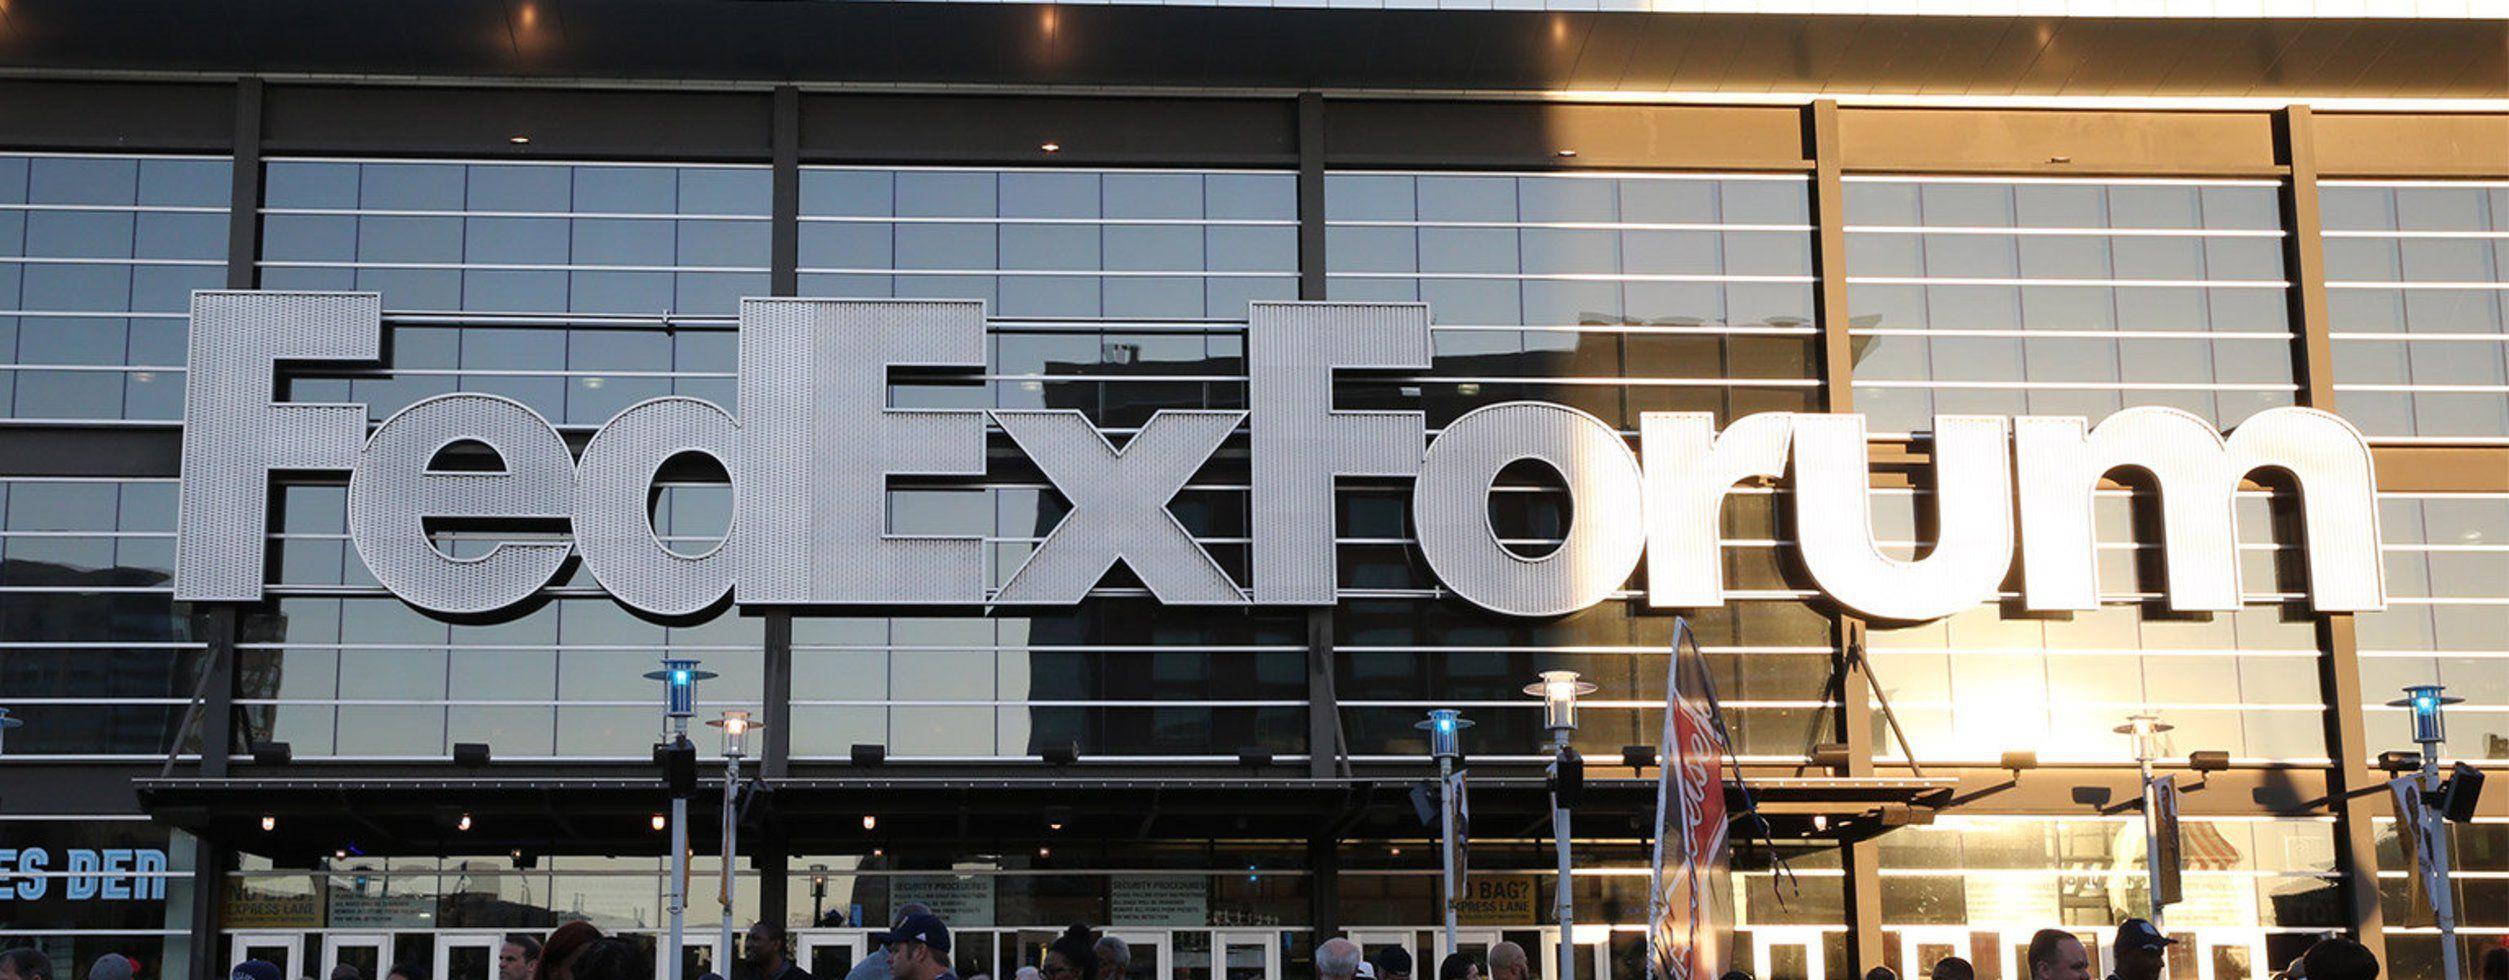 FedExForum Logo - Plan Your Visit | FedExForum - Home of the Memphis Grizzlies